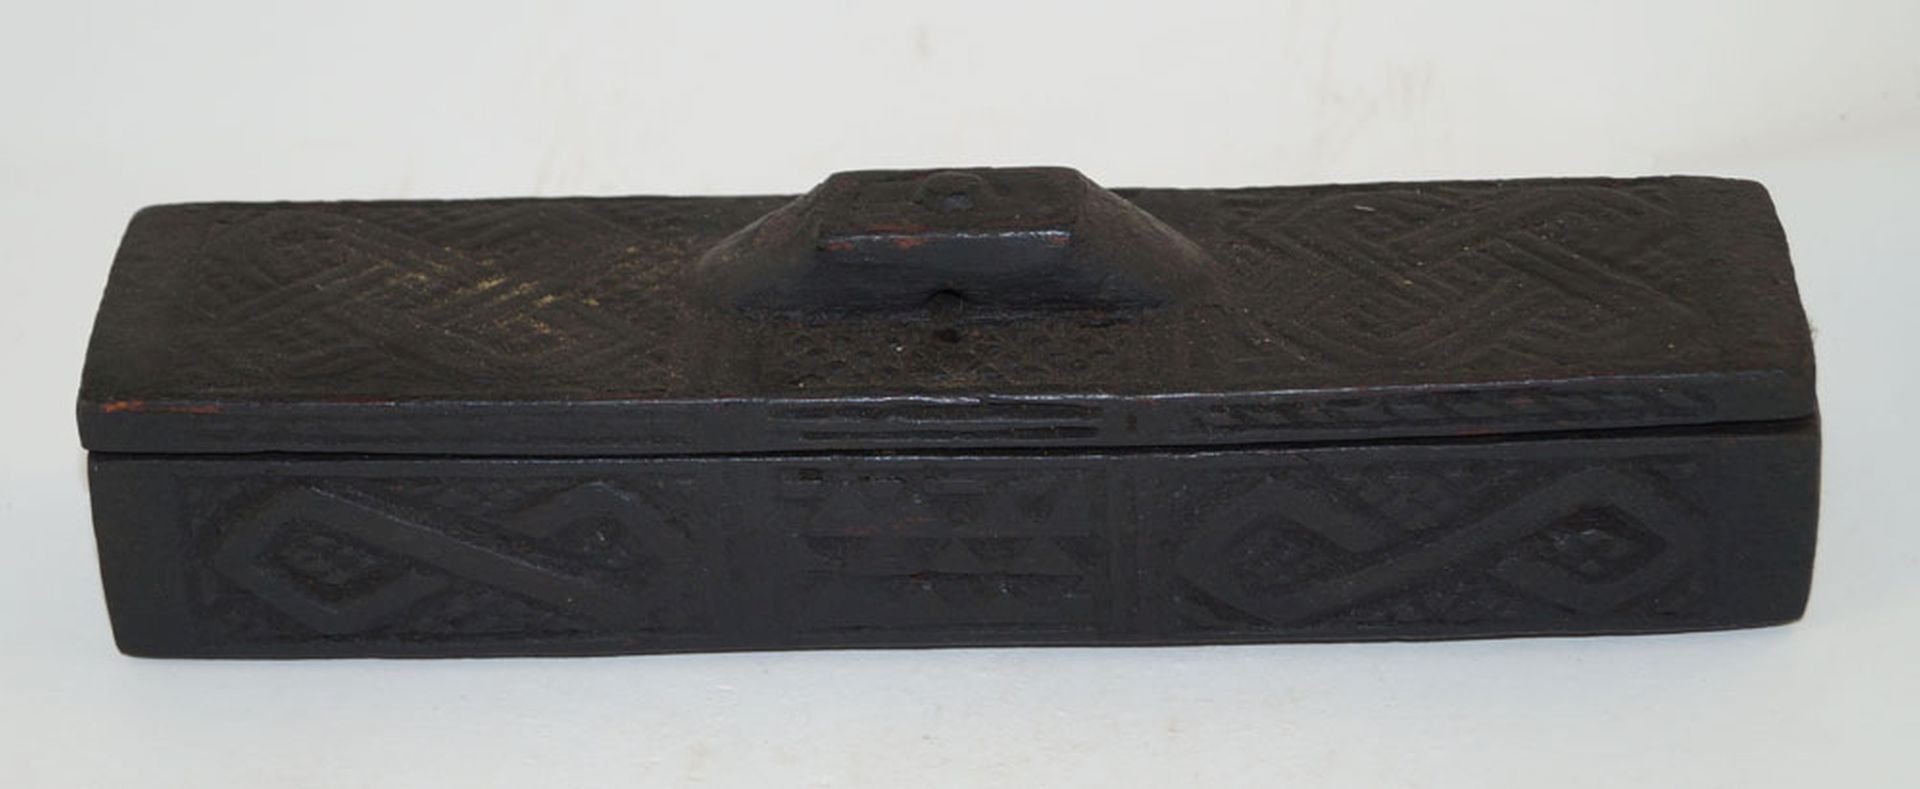 Null Holzdose, DR Kongo Kuba H. 4,5 cm, L. 25,5 cm. Rechteckige Deckeldose mit K&hellip;